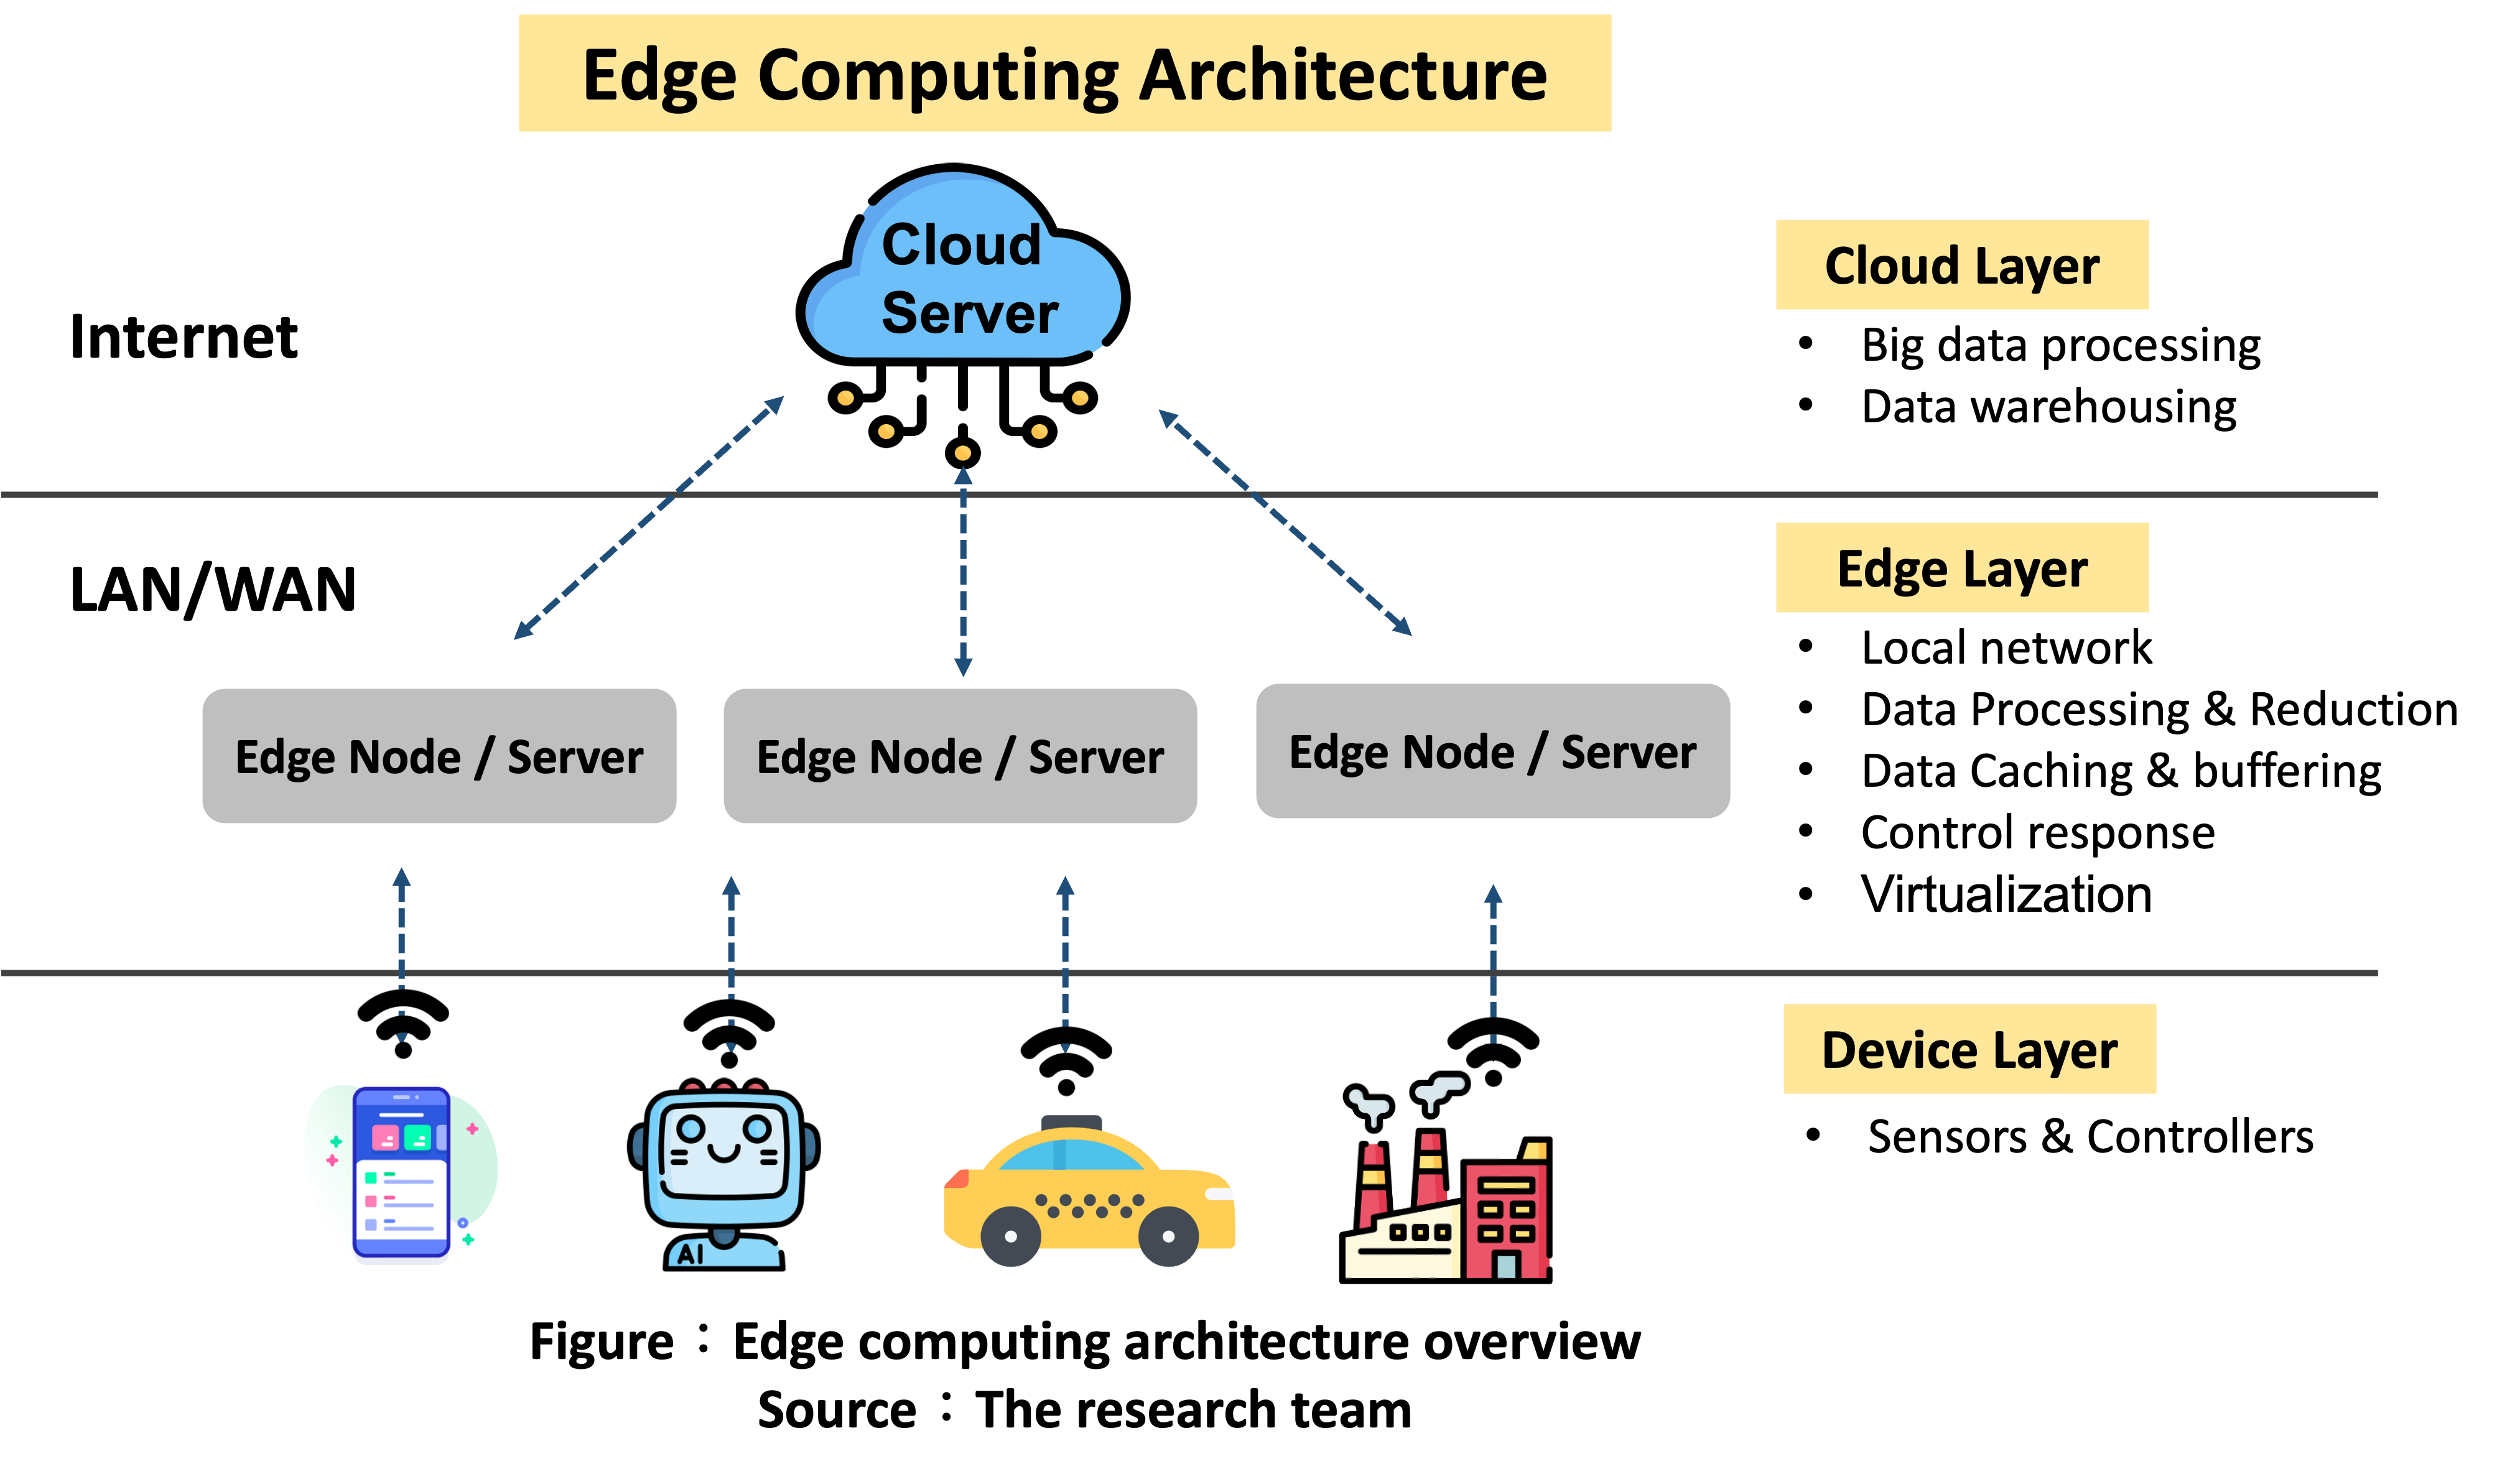 Edge Computing Architecture Overview 邊緣運算架構示意圖